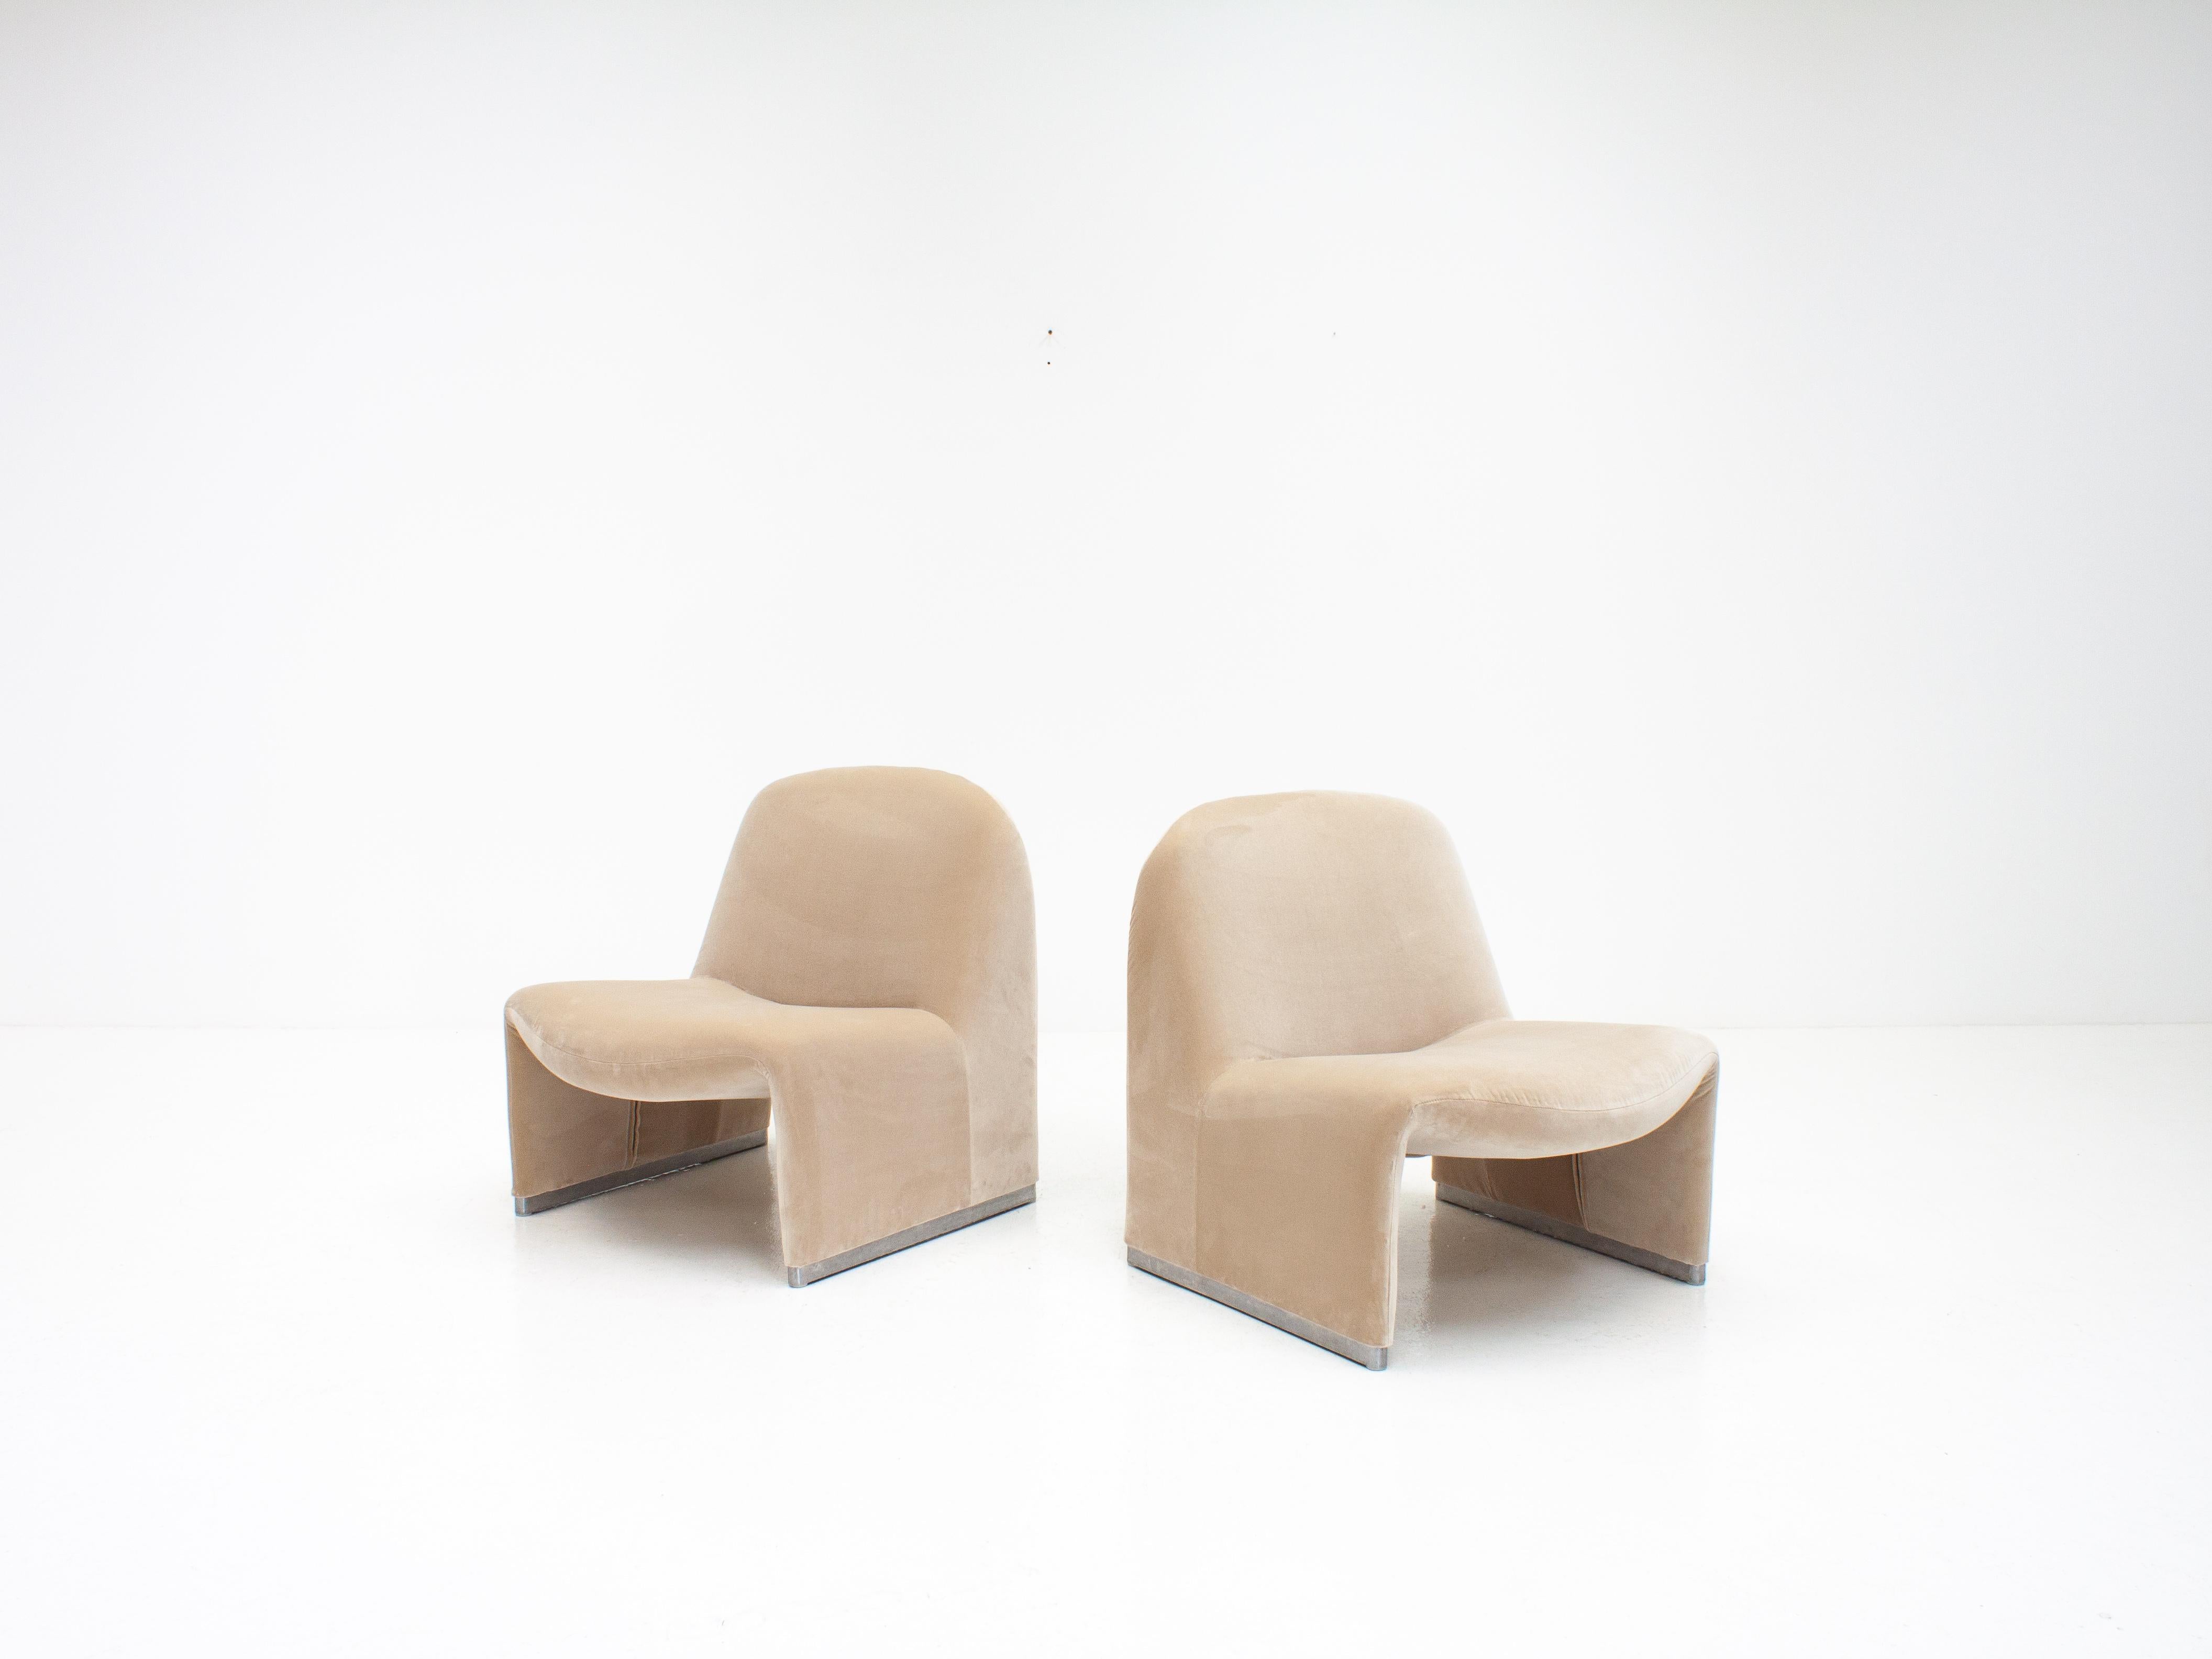 Steel Pair of Giancarlo Piretti “Alky” Chairs in New Velvet, Artifort, 1970s